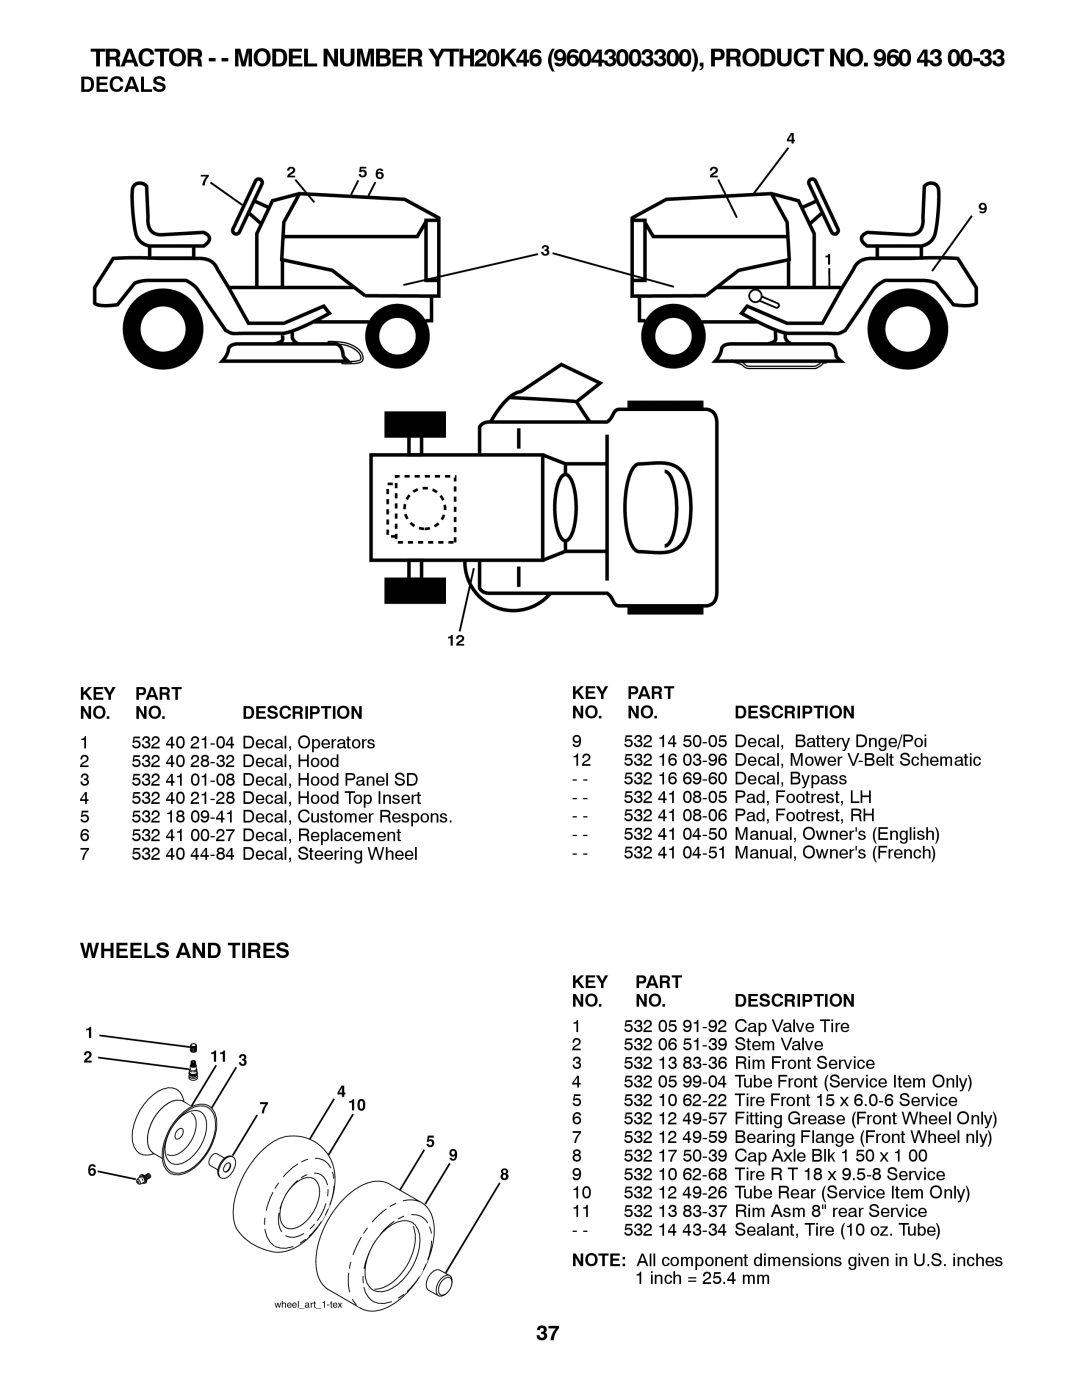 Husqvarna YTH20K46 owner manual Decals, Wheels And Tires, Part, Description 